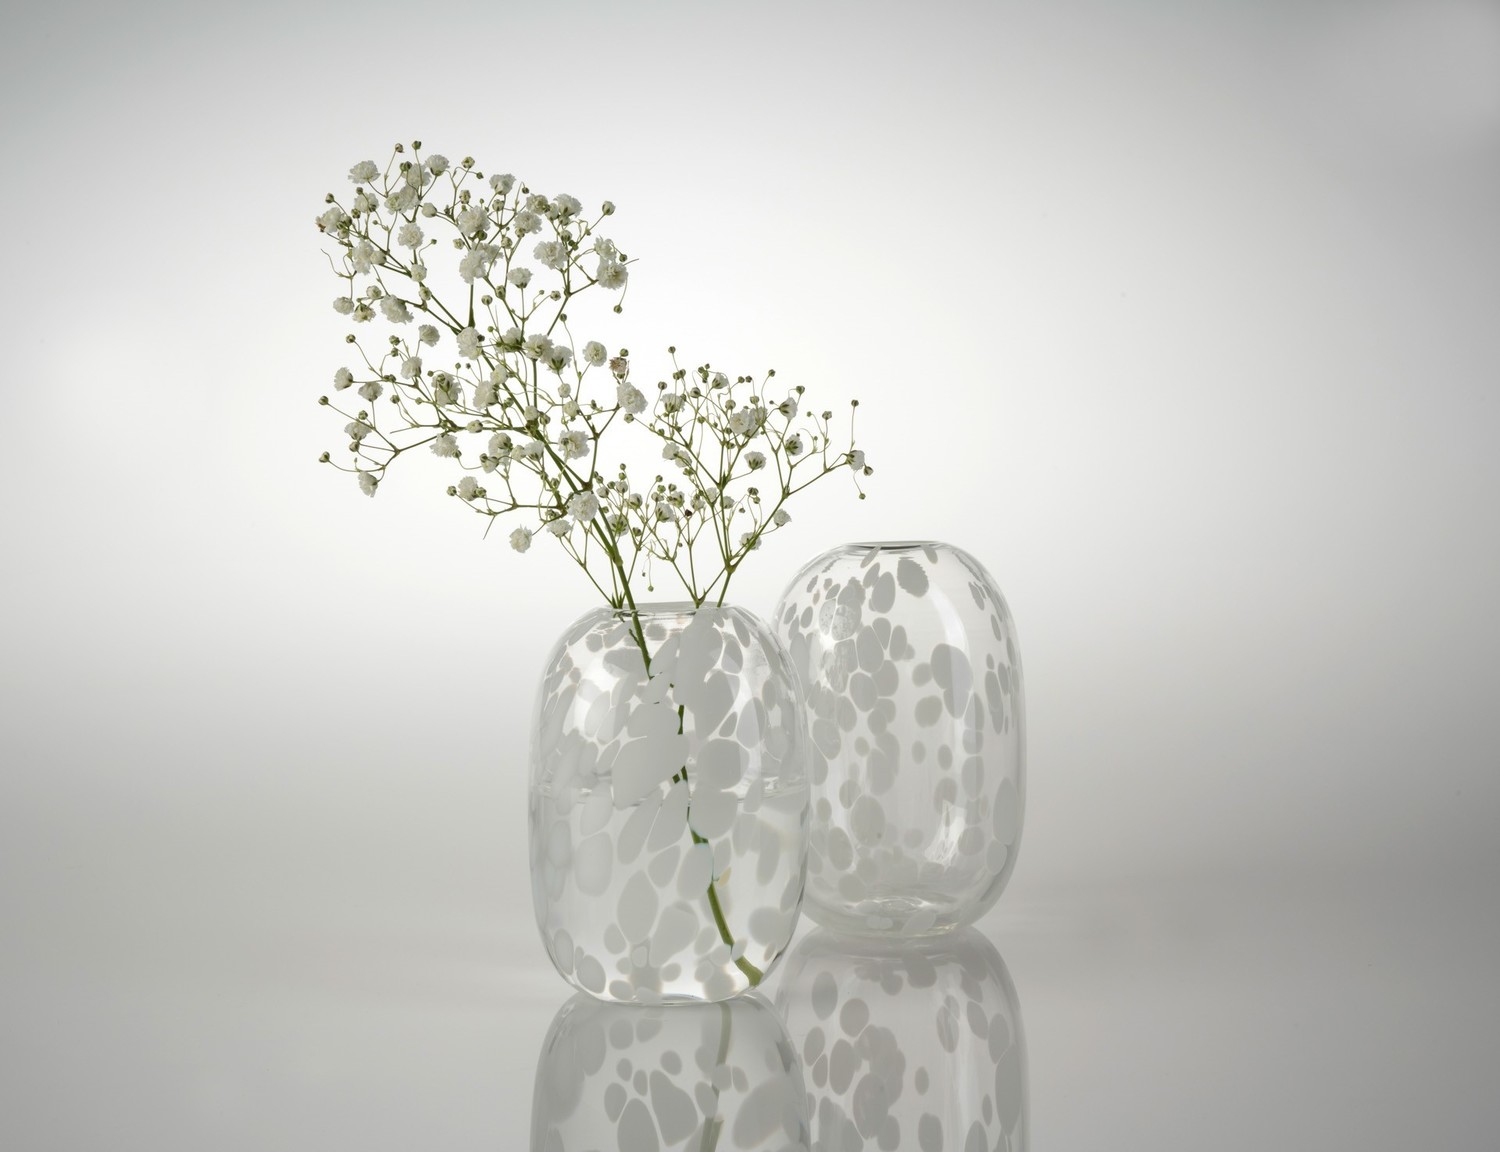 Aussie Front Yard Vases - Agapanthus (White spots)